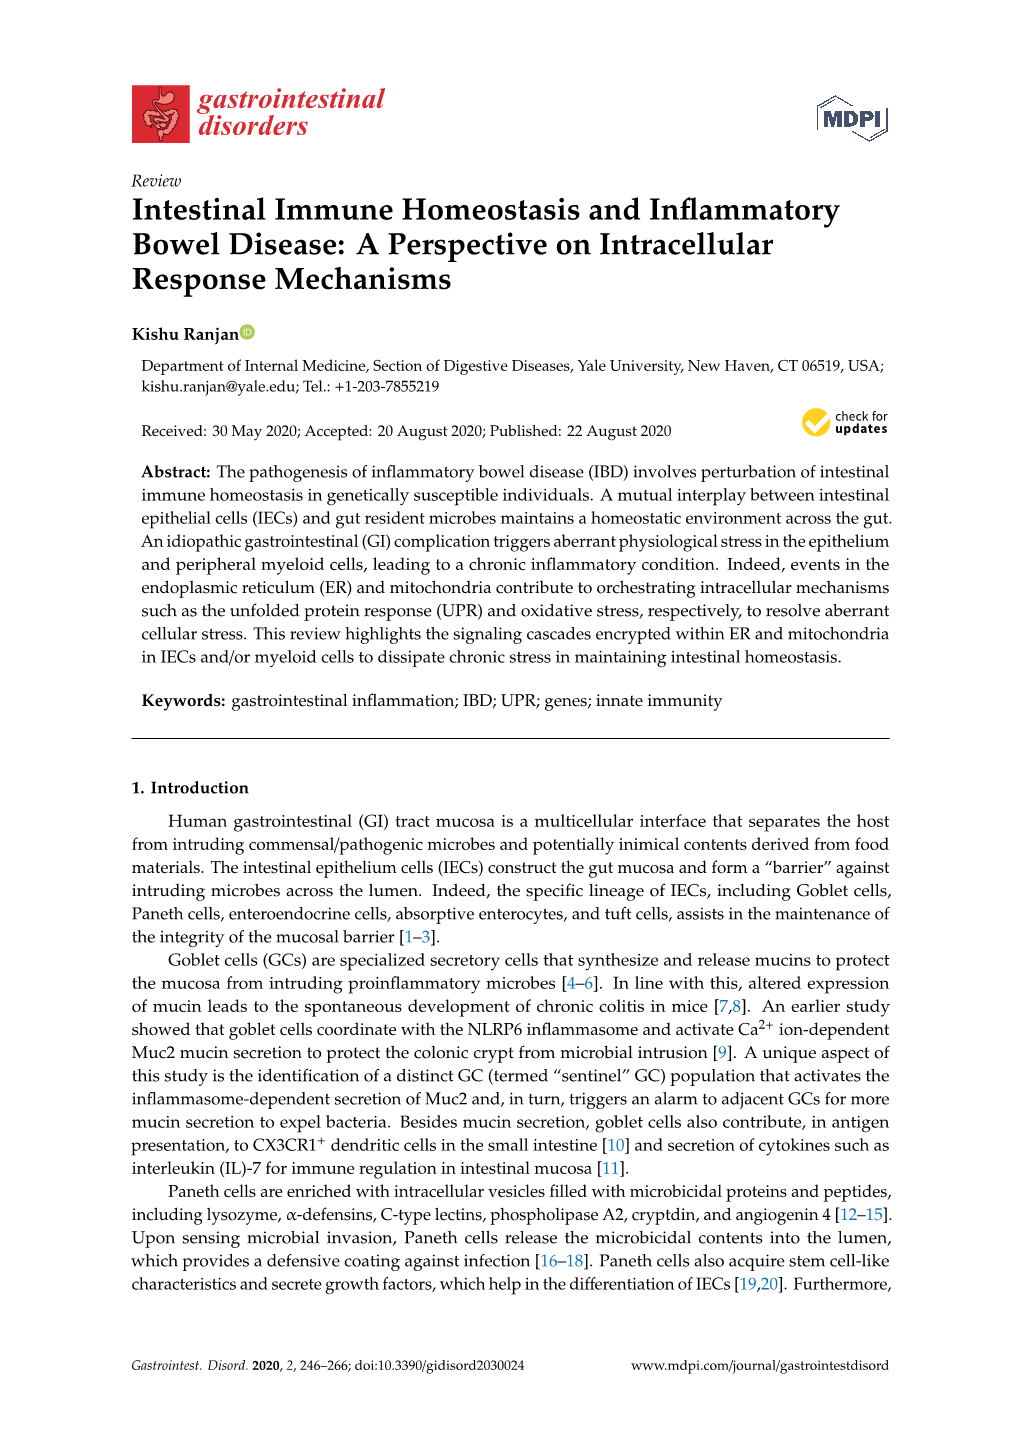 Intestinal Immune Homeostasis and Inflammatory Bowel Disease